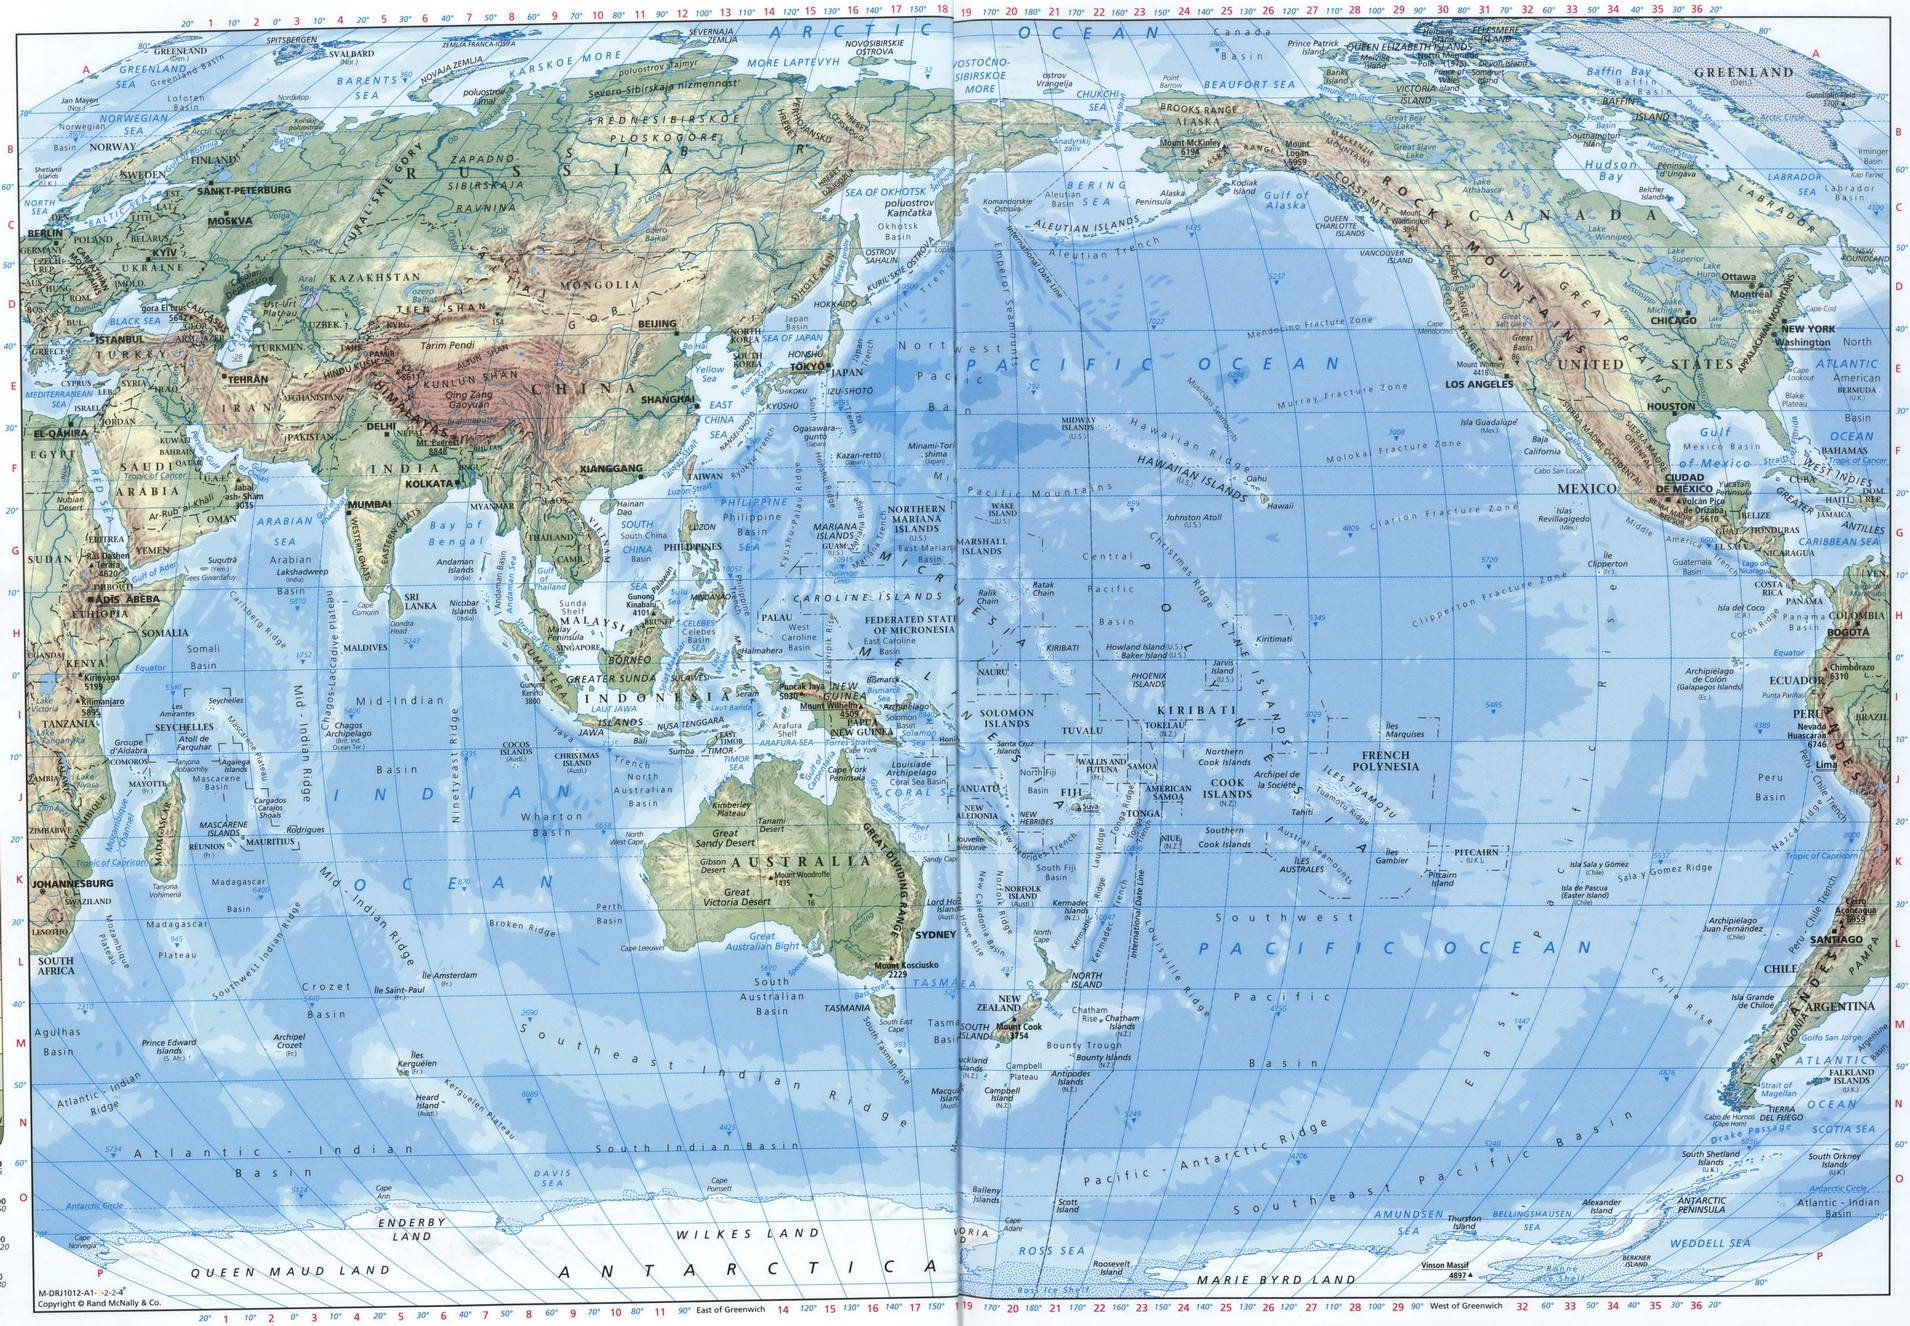 Pacific ocean map